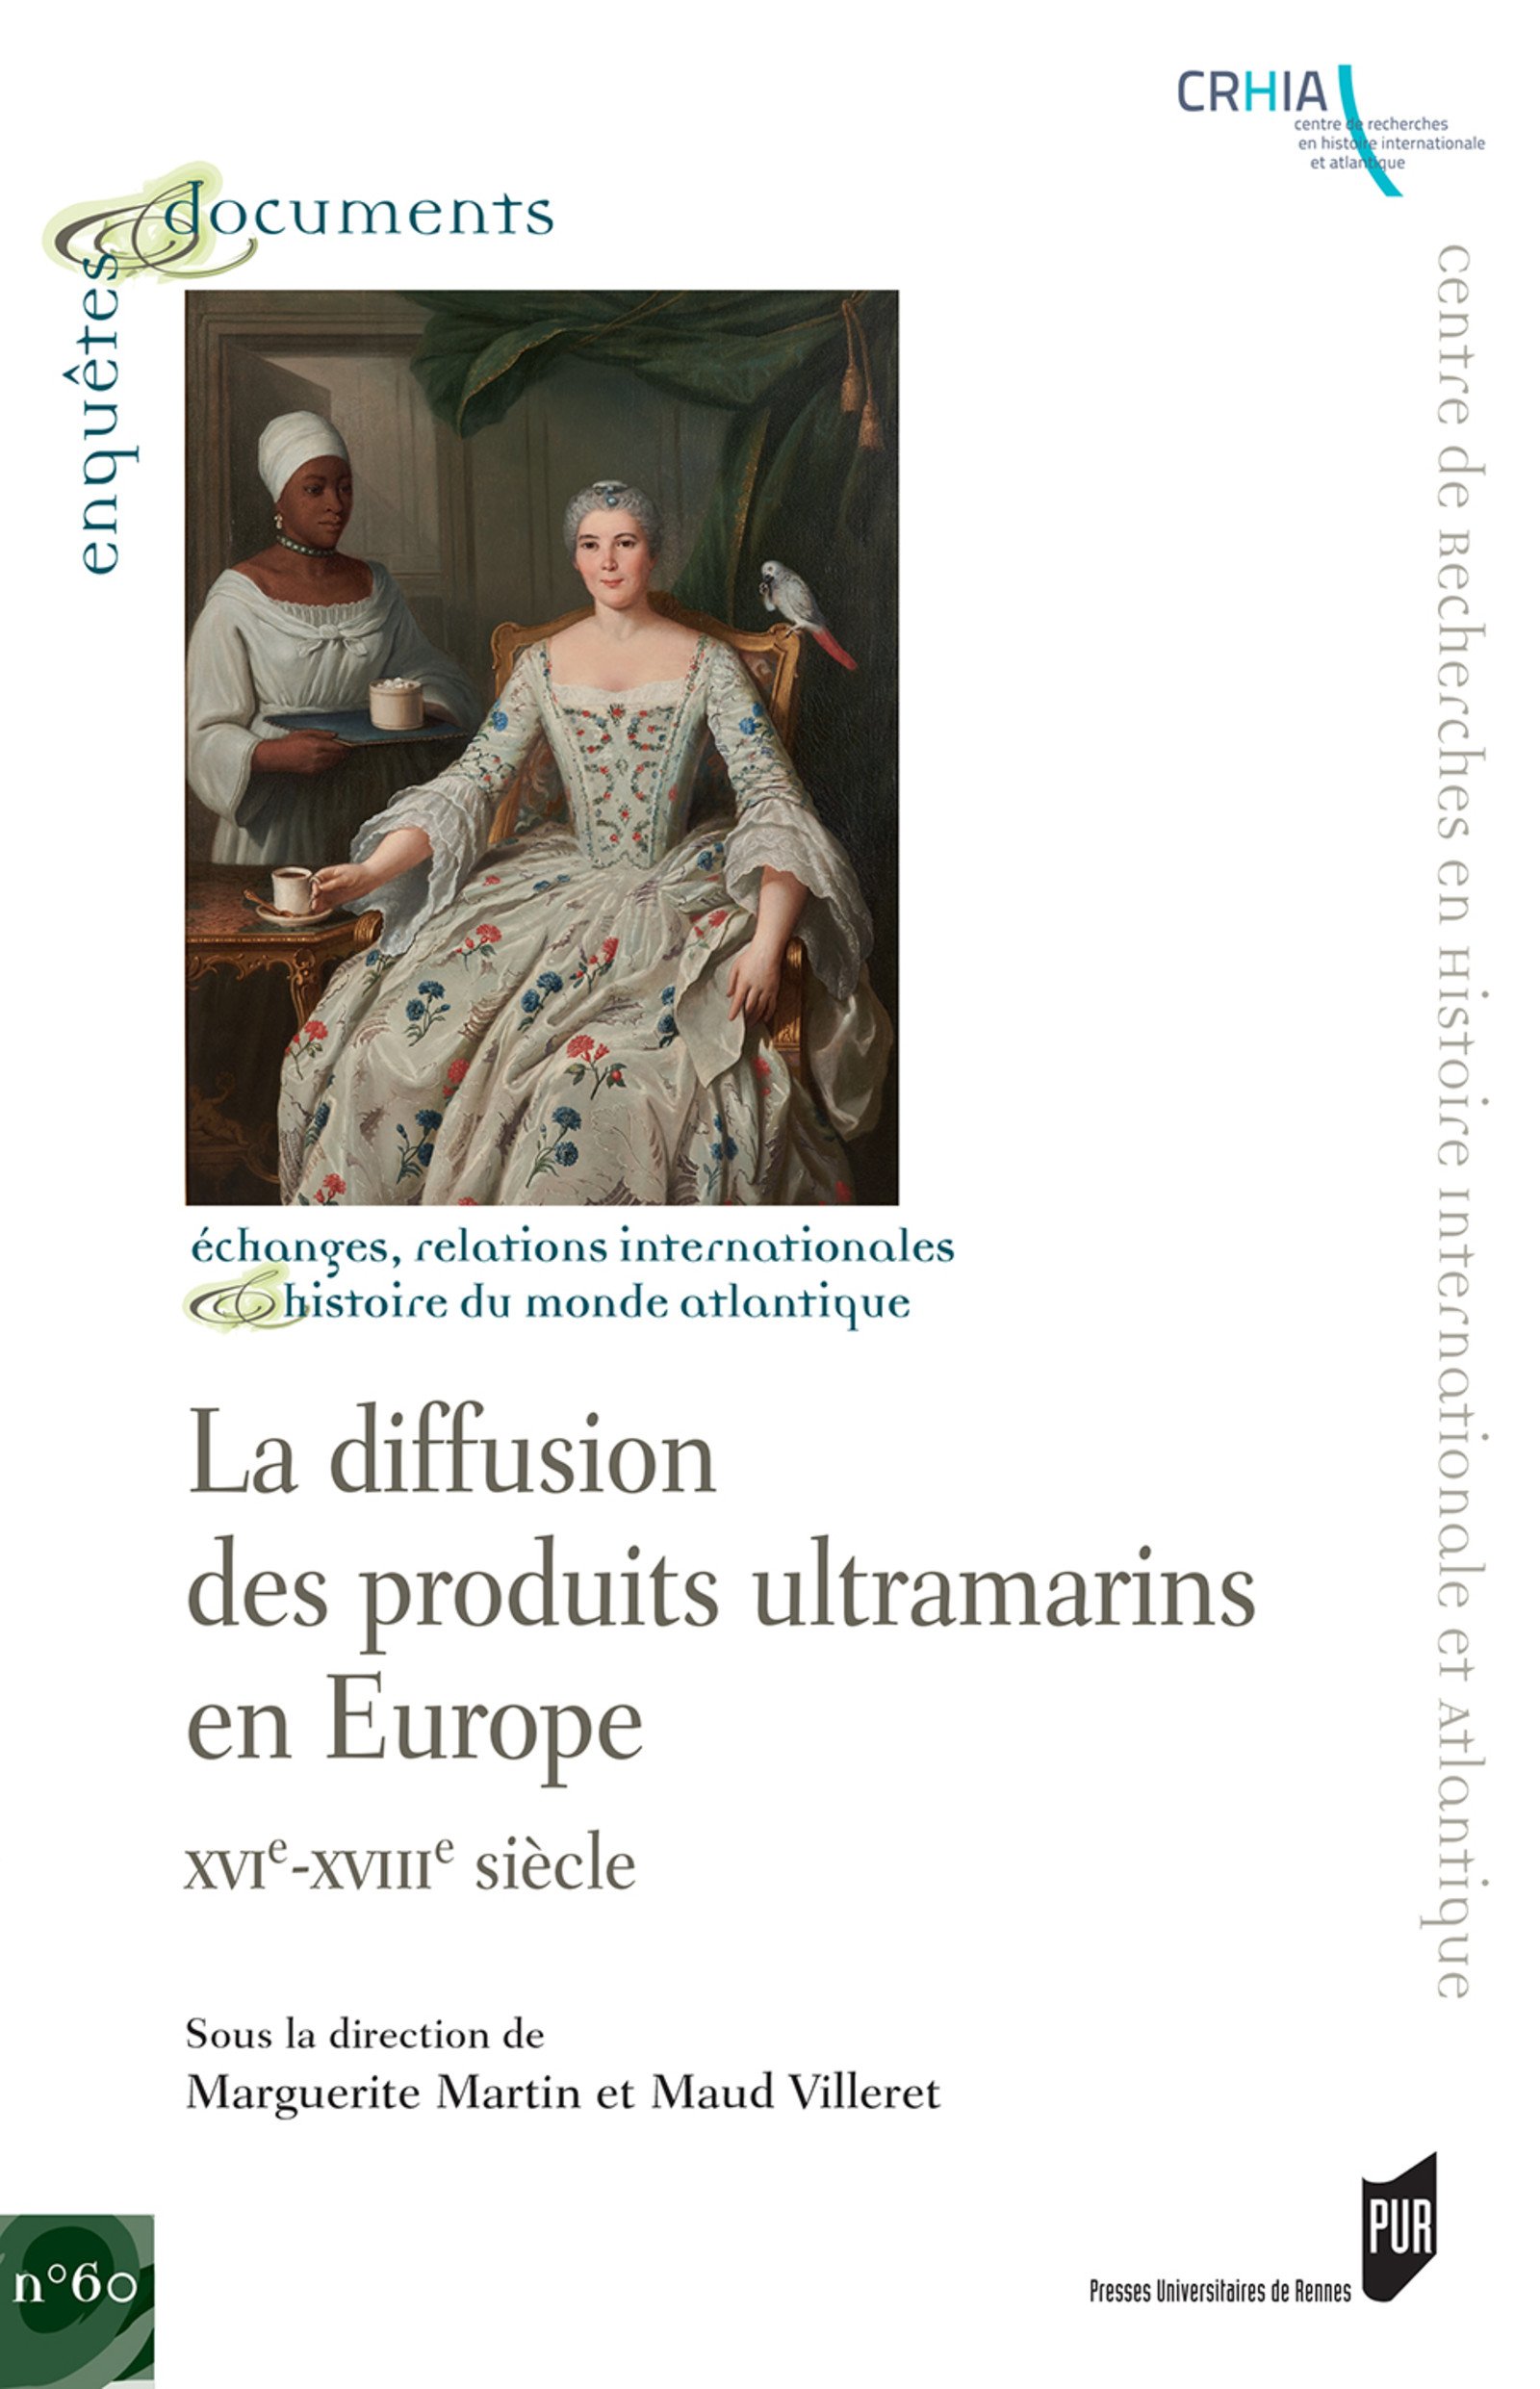 La diffusion des produits ultramarins en Europe. XVIe-XVIIIe siècle, 2018, 170 p.